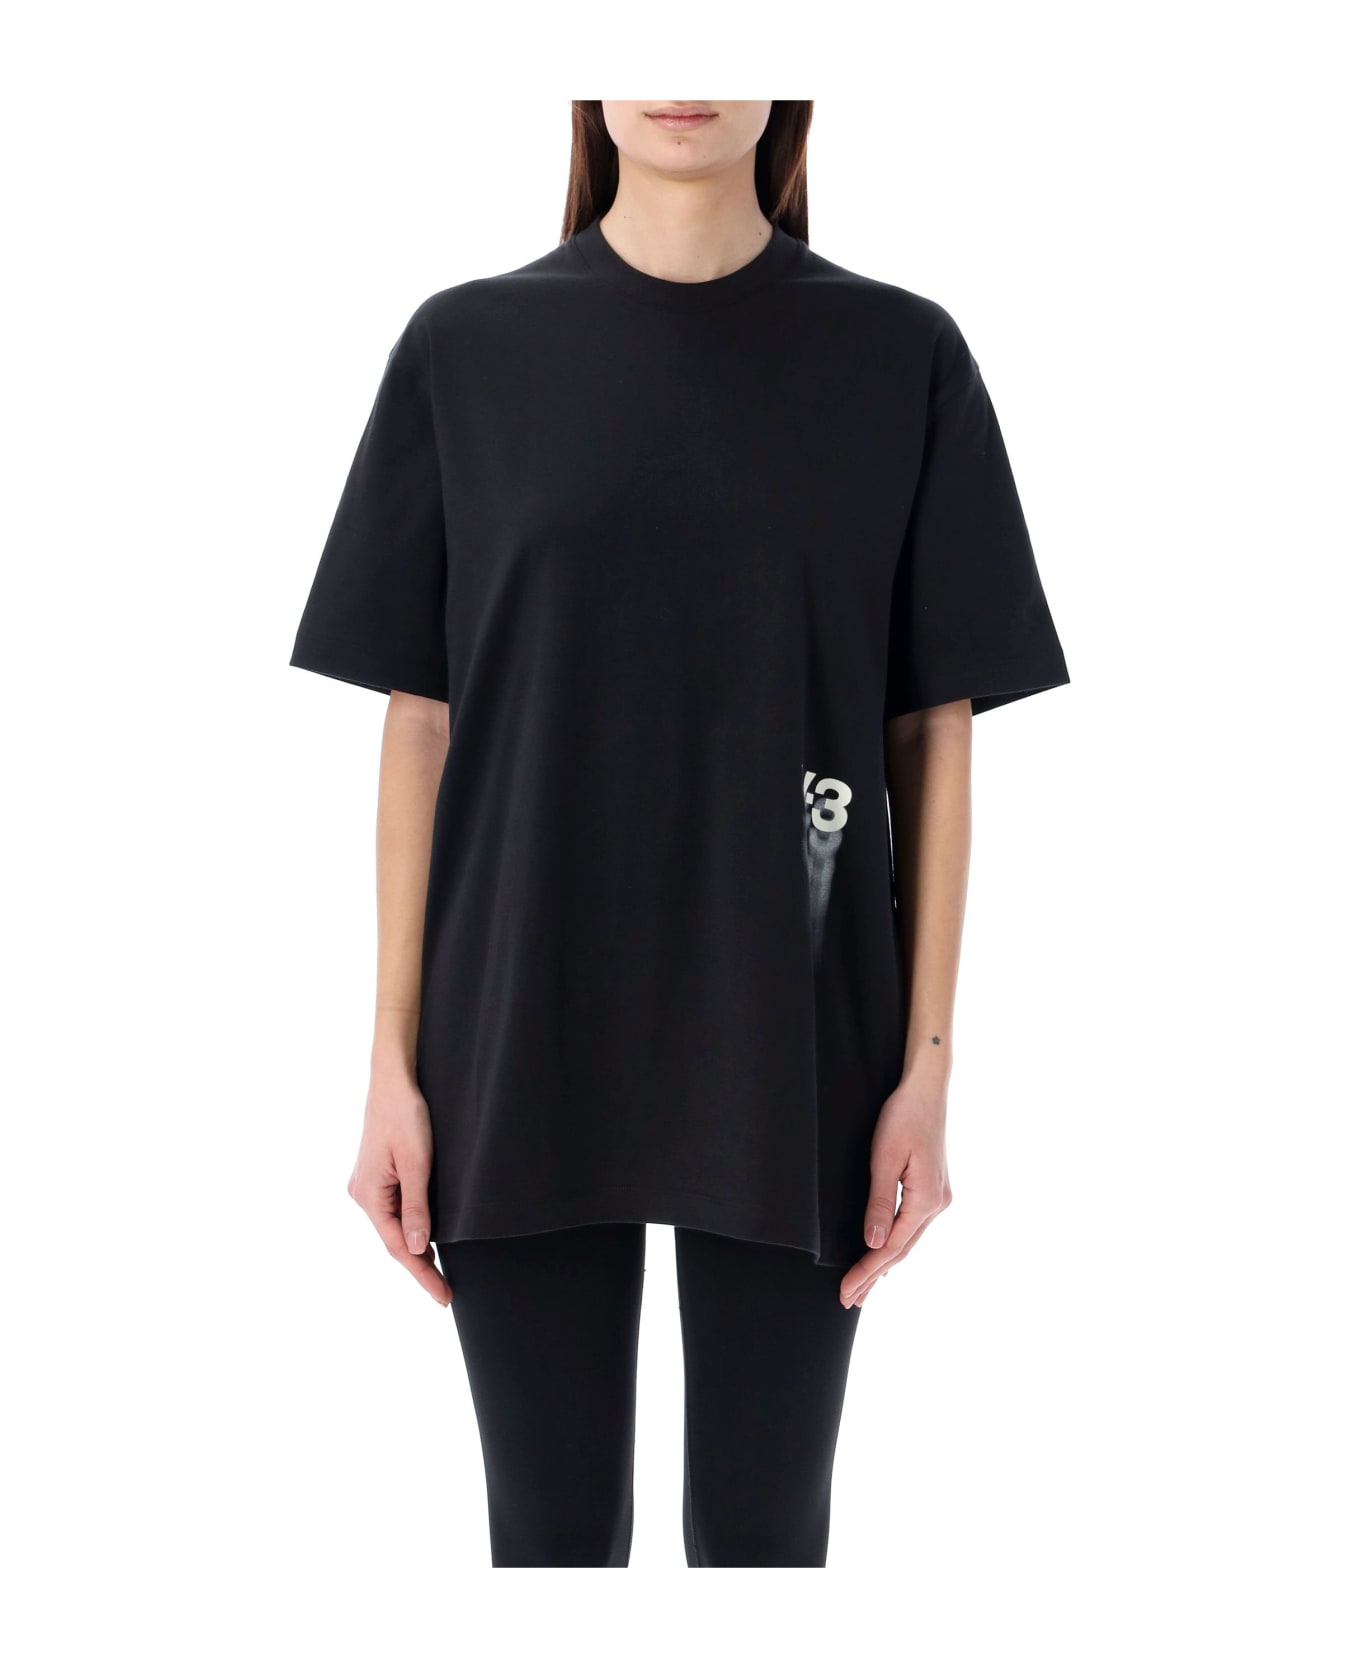 Y-3 Graphic Short Sleeves Tee - BLACK Tシャツ